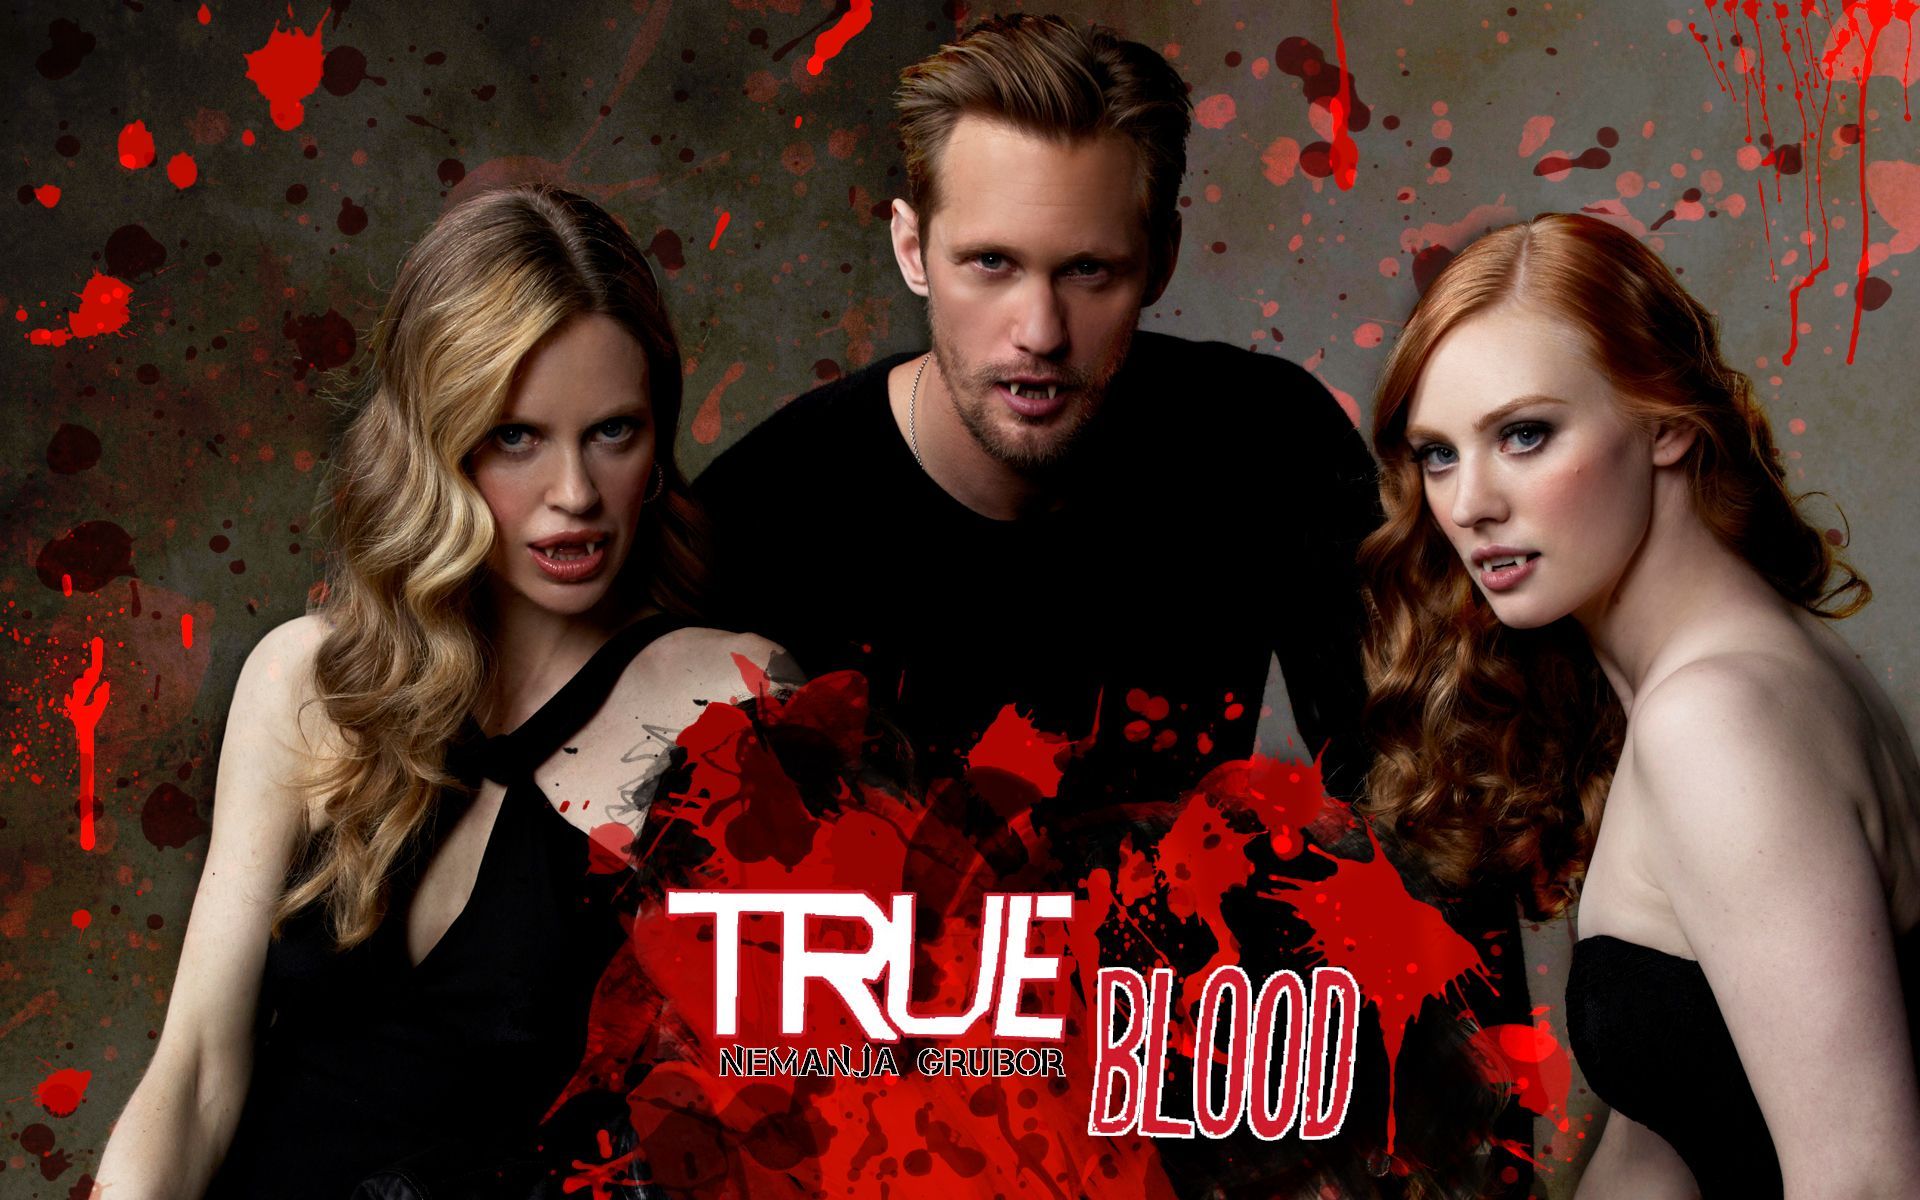 True Blood Wallpapers and Blends on Bill Compton fans - DeviantArt